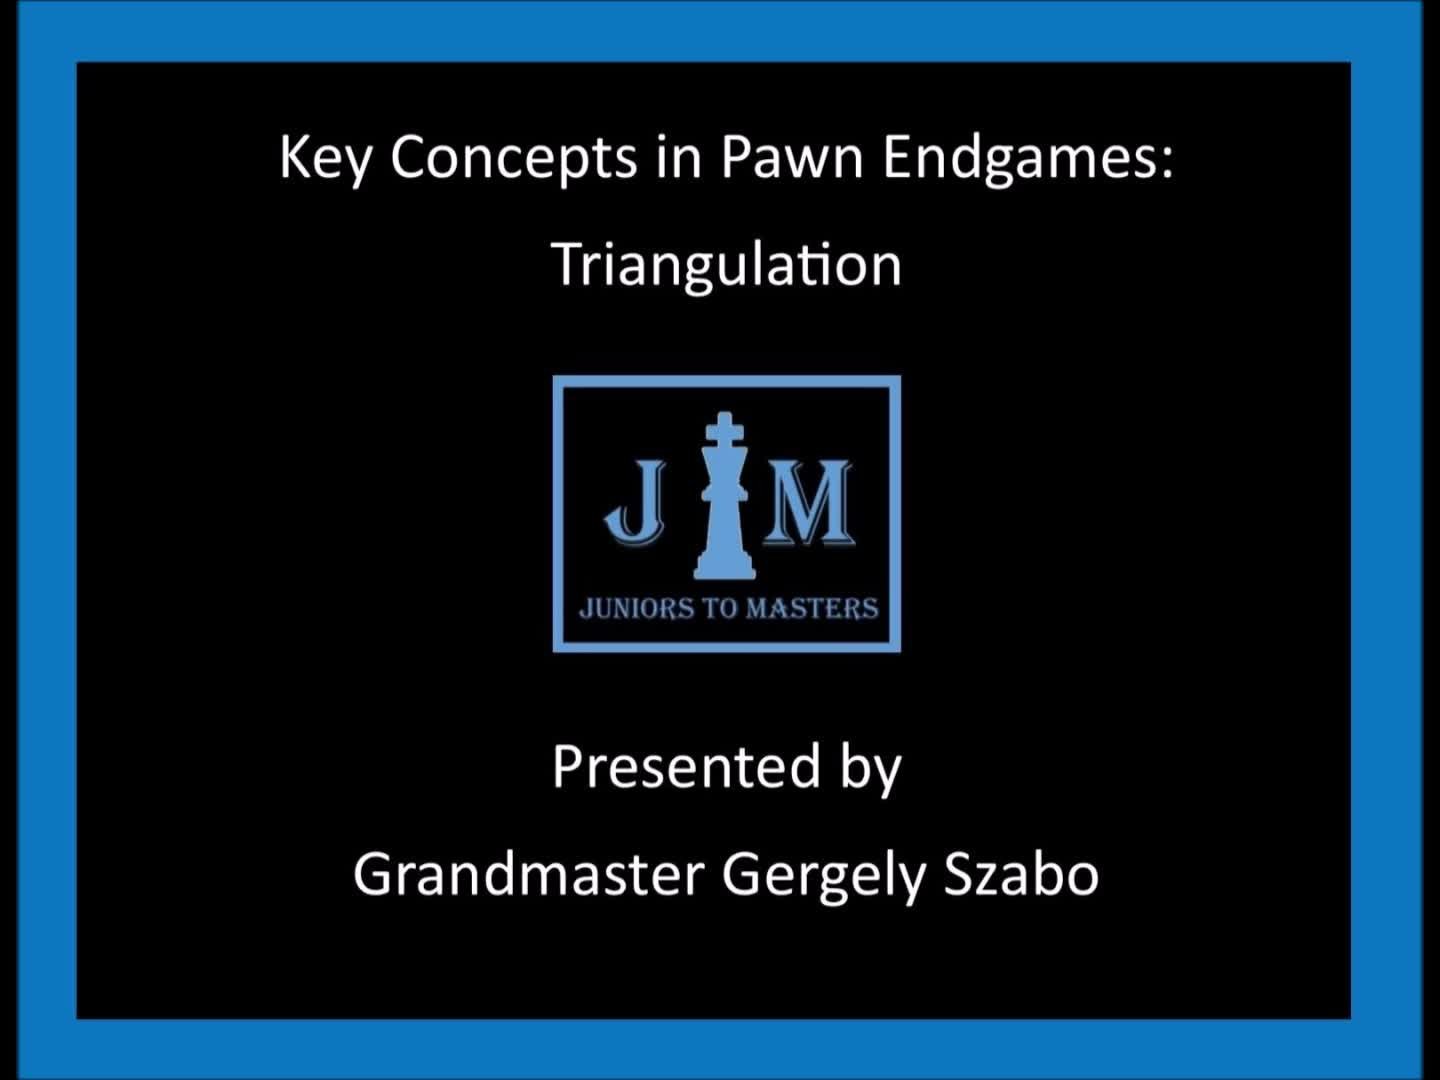 Grandmaster Gergely Szabo Presents Triangulation